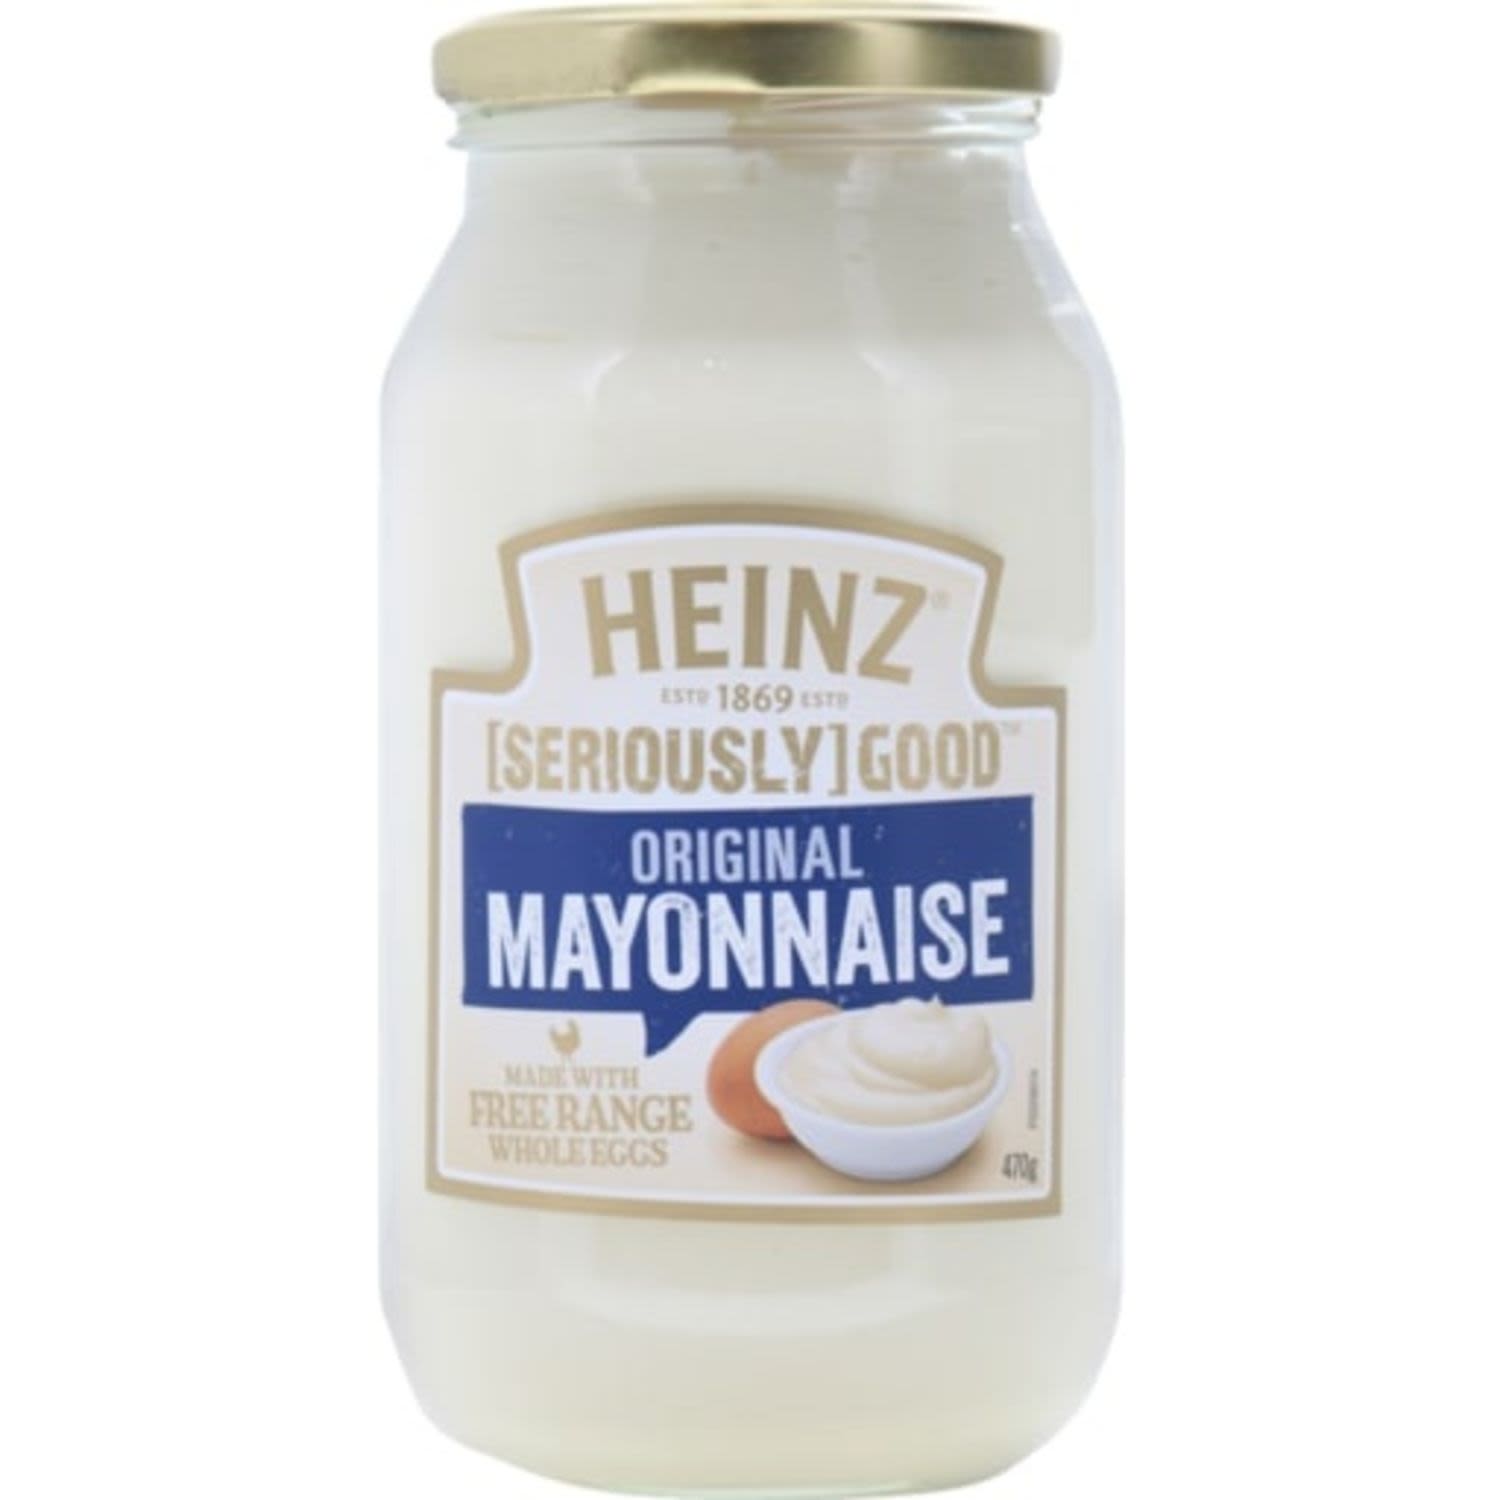 Heinz [Seriously] Good Mayonnaise Original With Free Range Eggs , 470 Gram